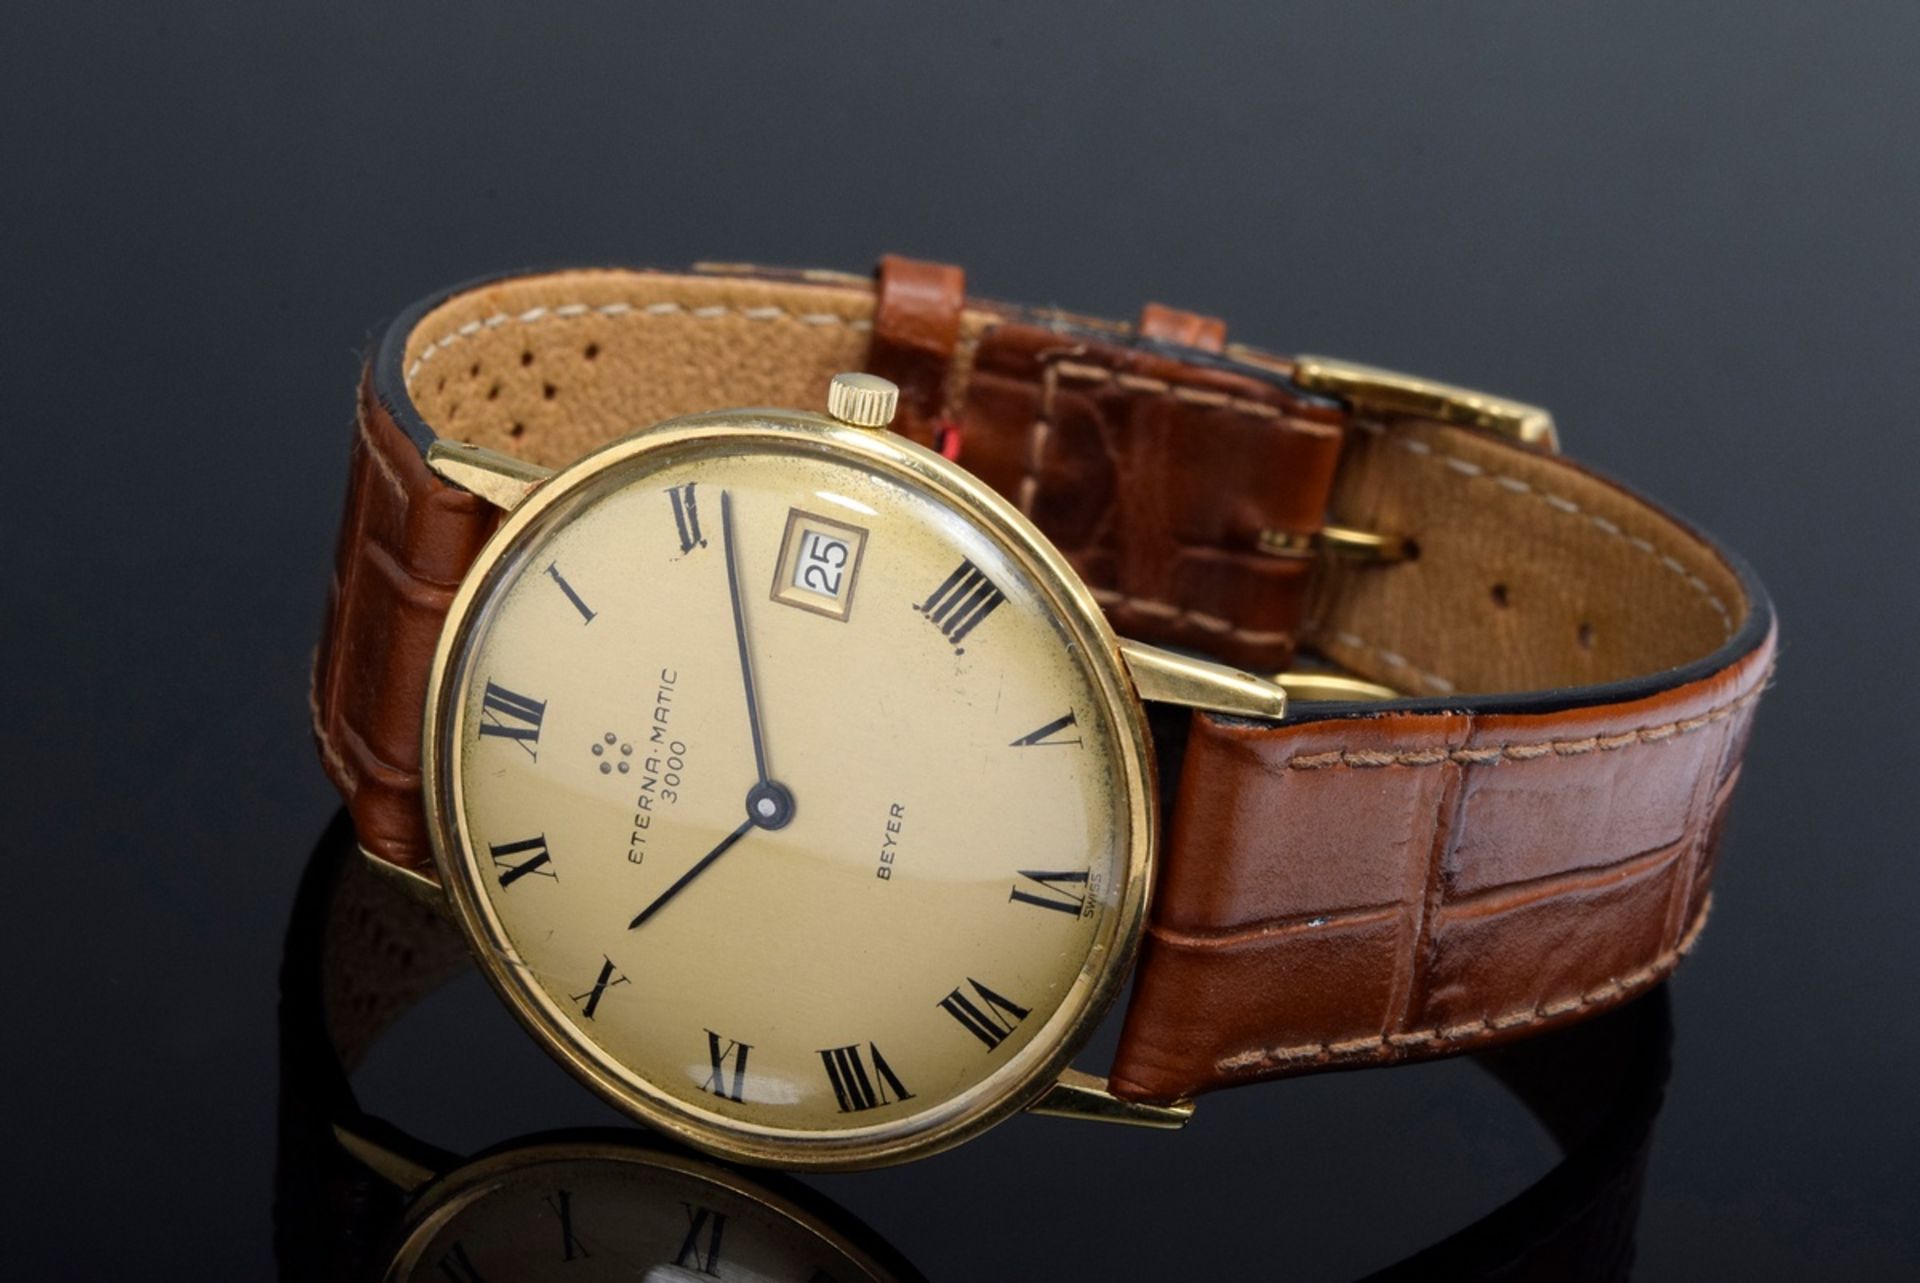 GG 750 Eterna Matic "3000 Beyer" Armbanduhr mit | GG 750 Eterna Matic "3000 Beyer" wristwatch with - Image 2 of 5